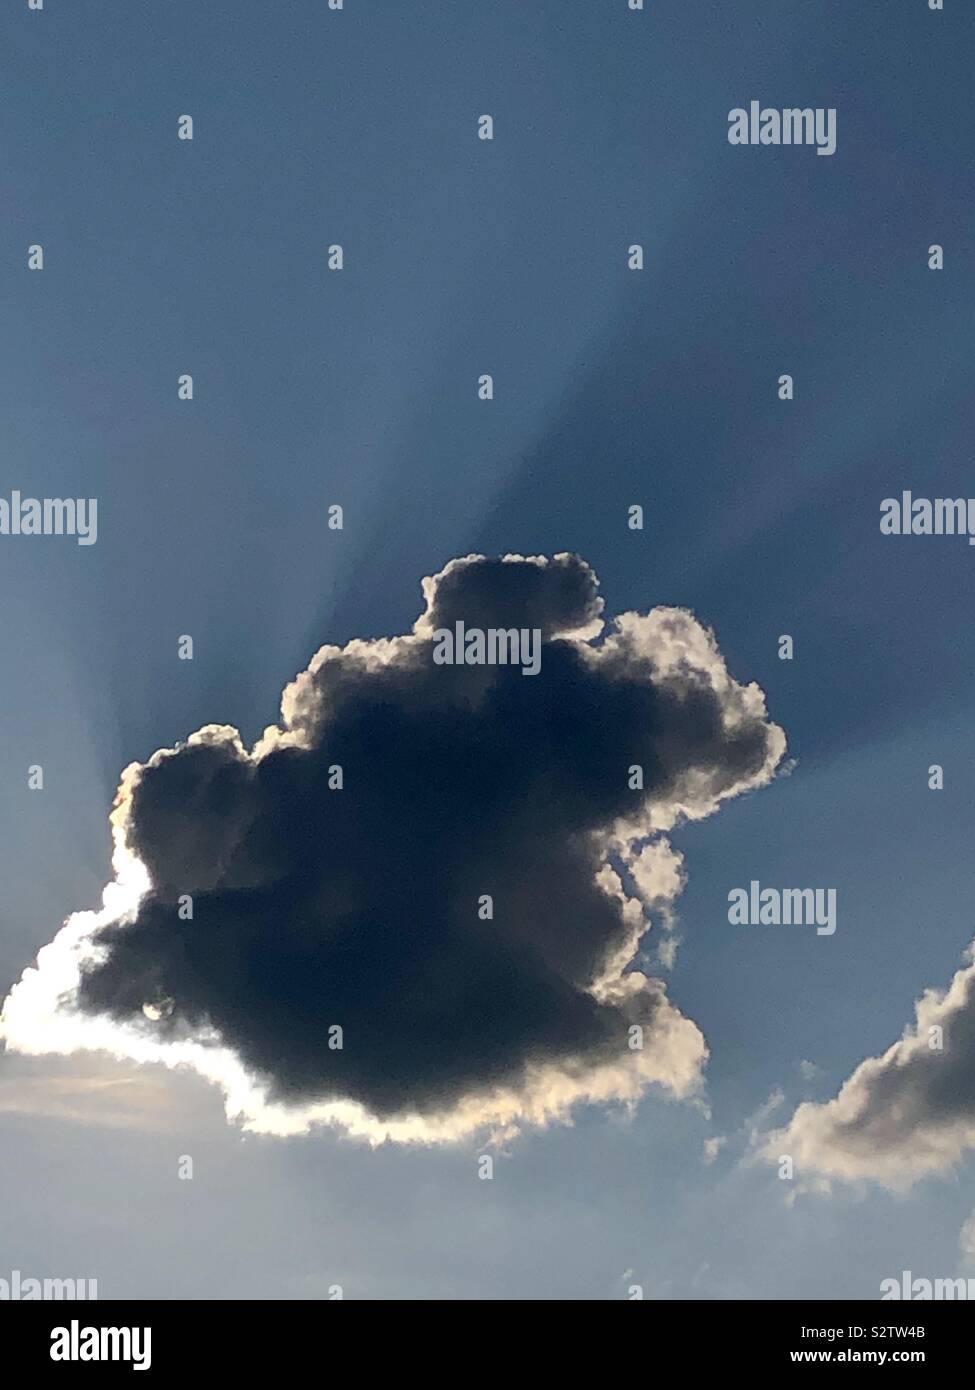 Darkened cloud hiding the sun against a blue sky Stock Photo